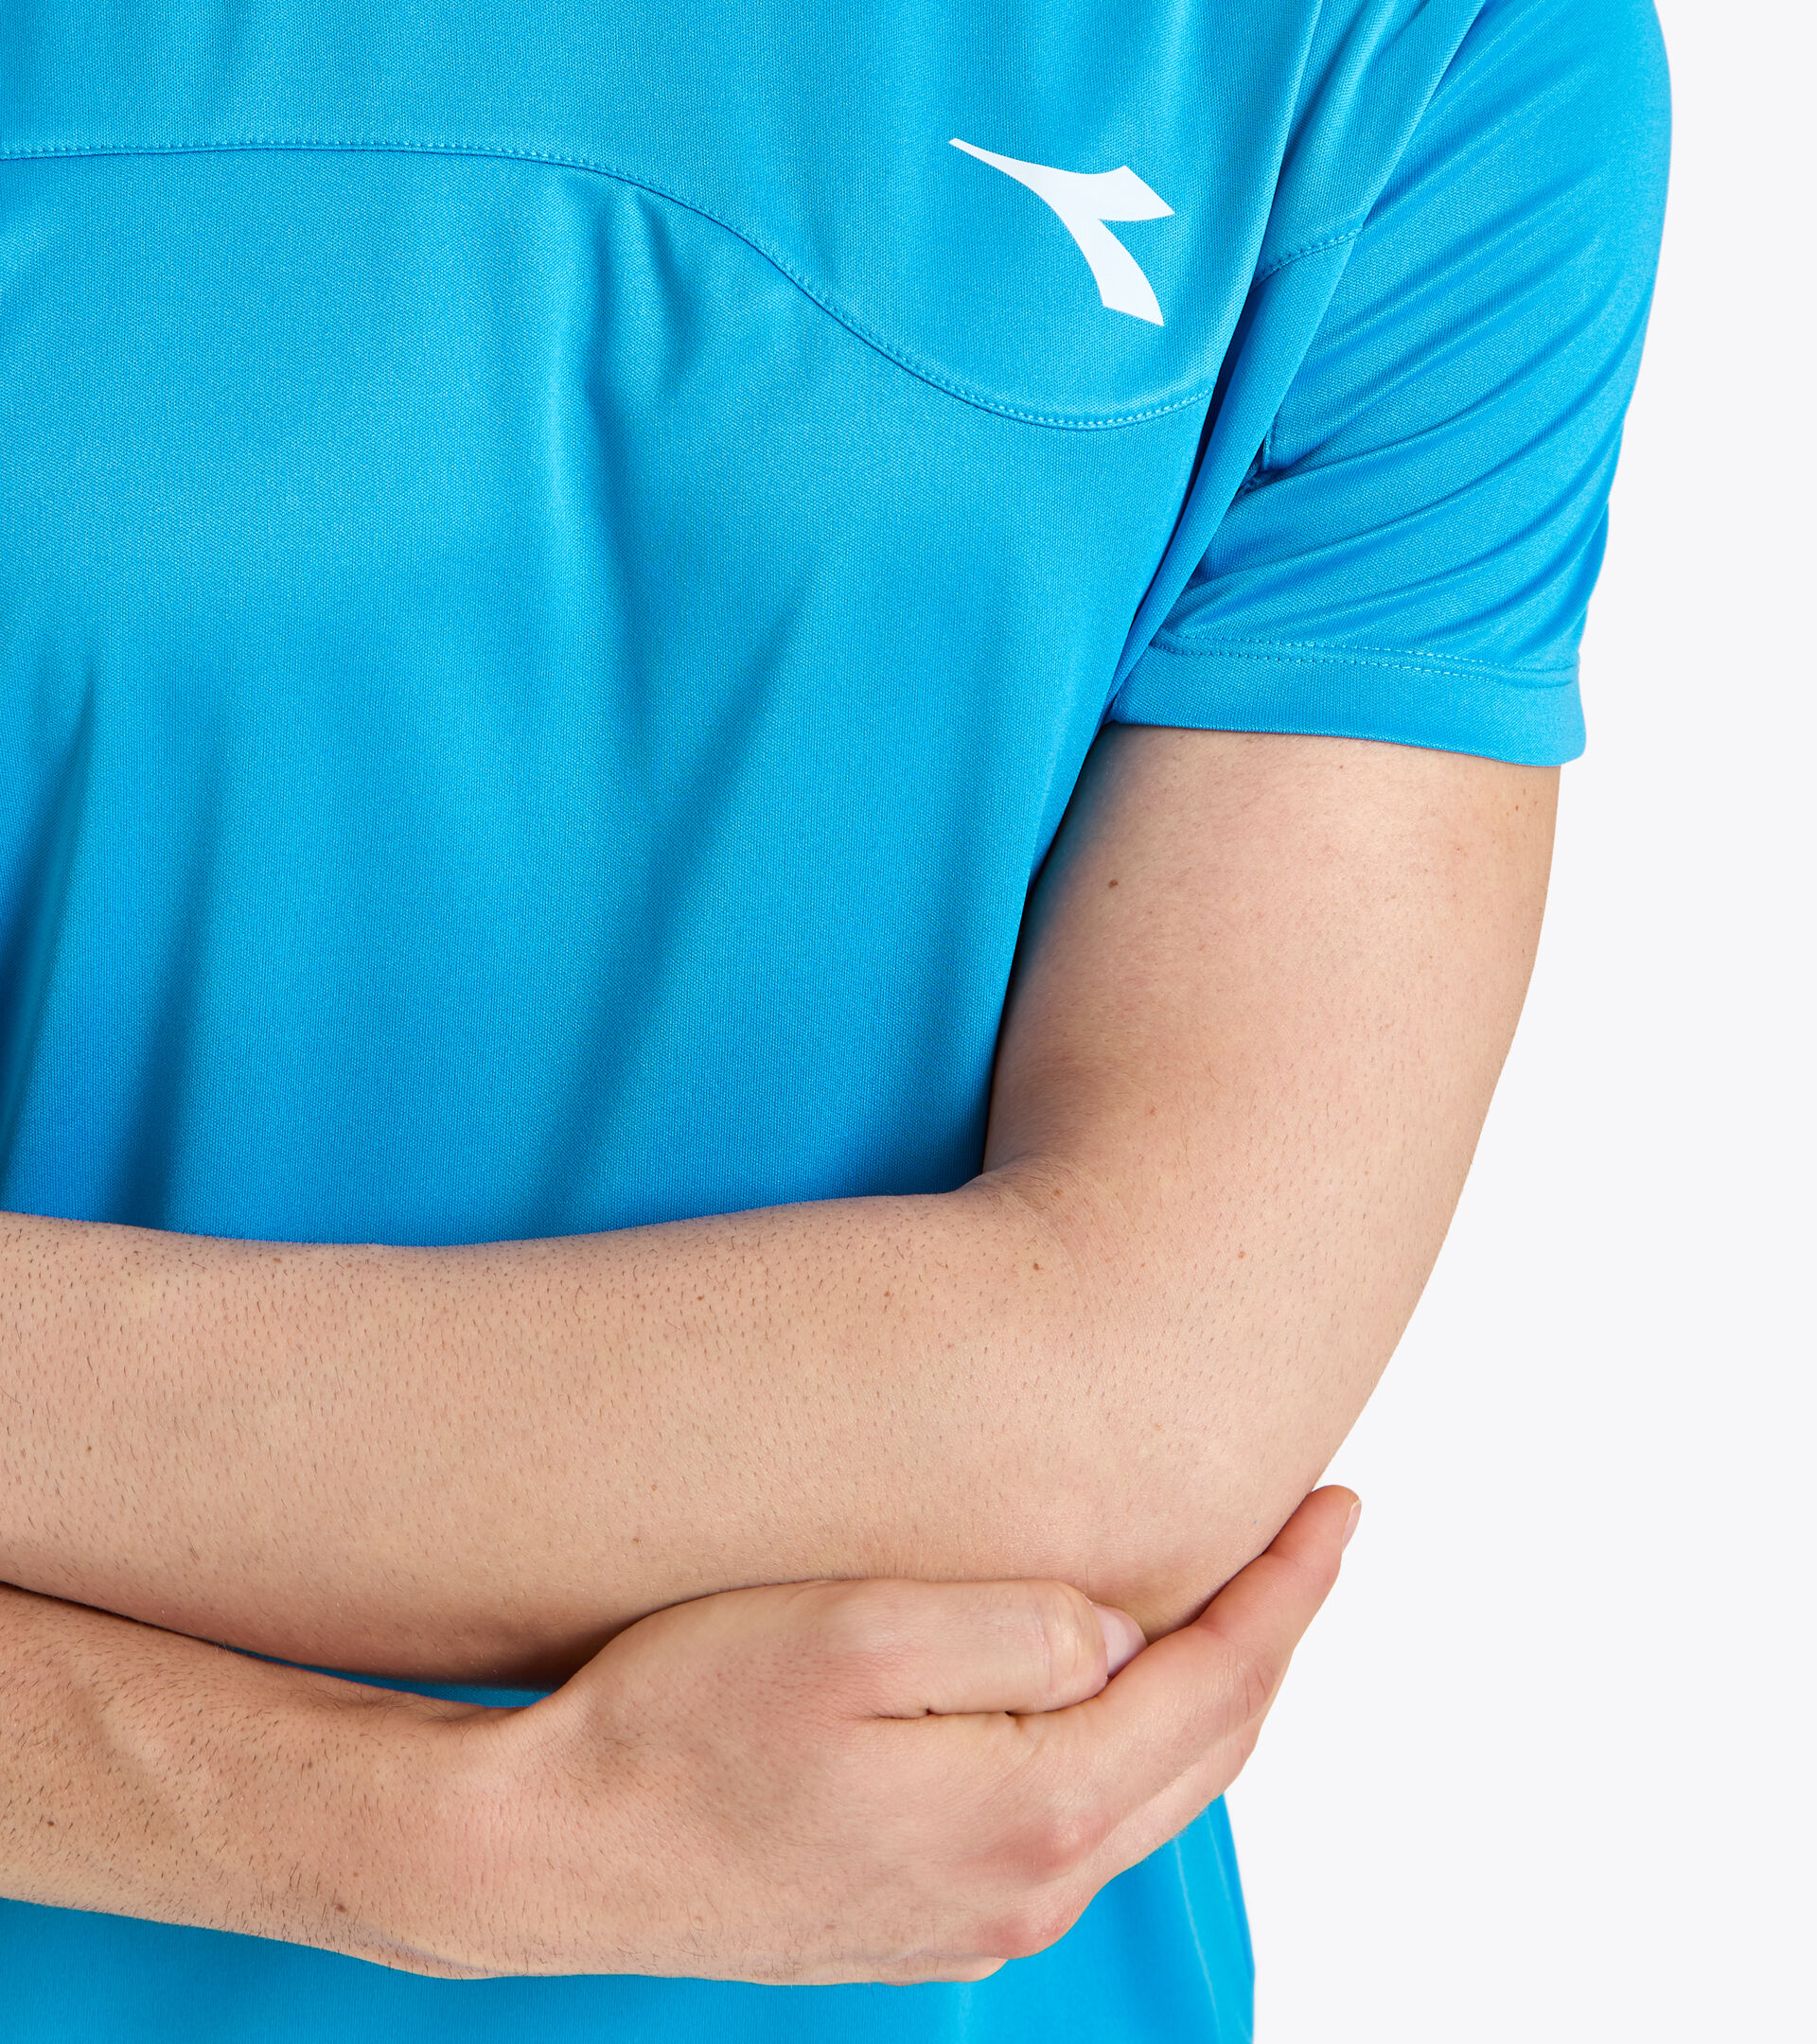 Camiseta de tenis - Hombre T-SHIRT TEAM AZUL REAL FLUO - Diadora